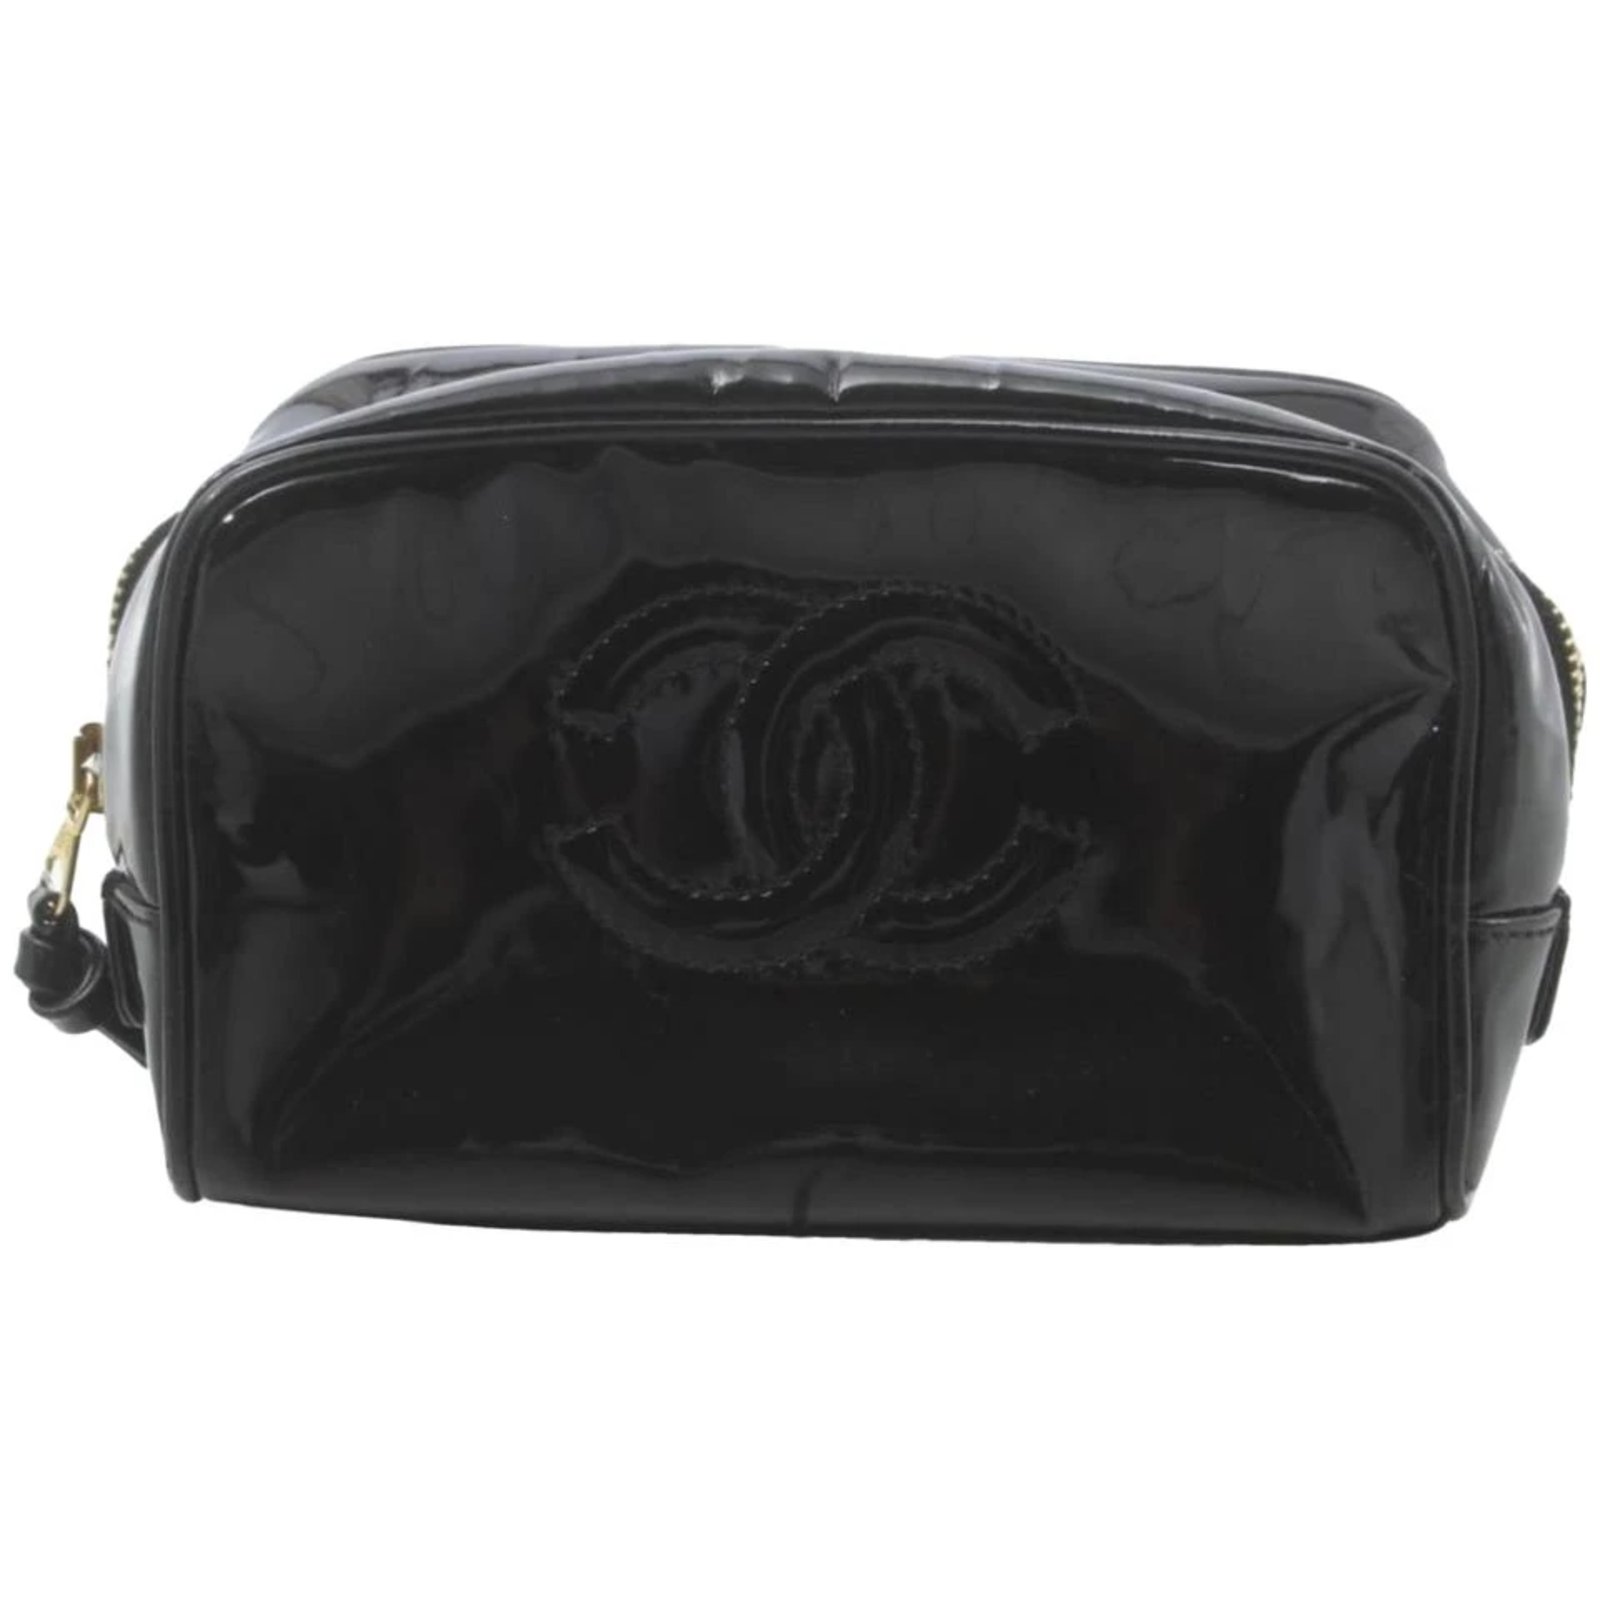 Chanel cosmetic Bag 2021  Chanel cosmetic bag, Chanel cosmetics, Bags